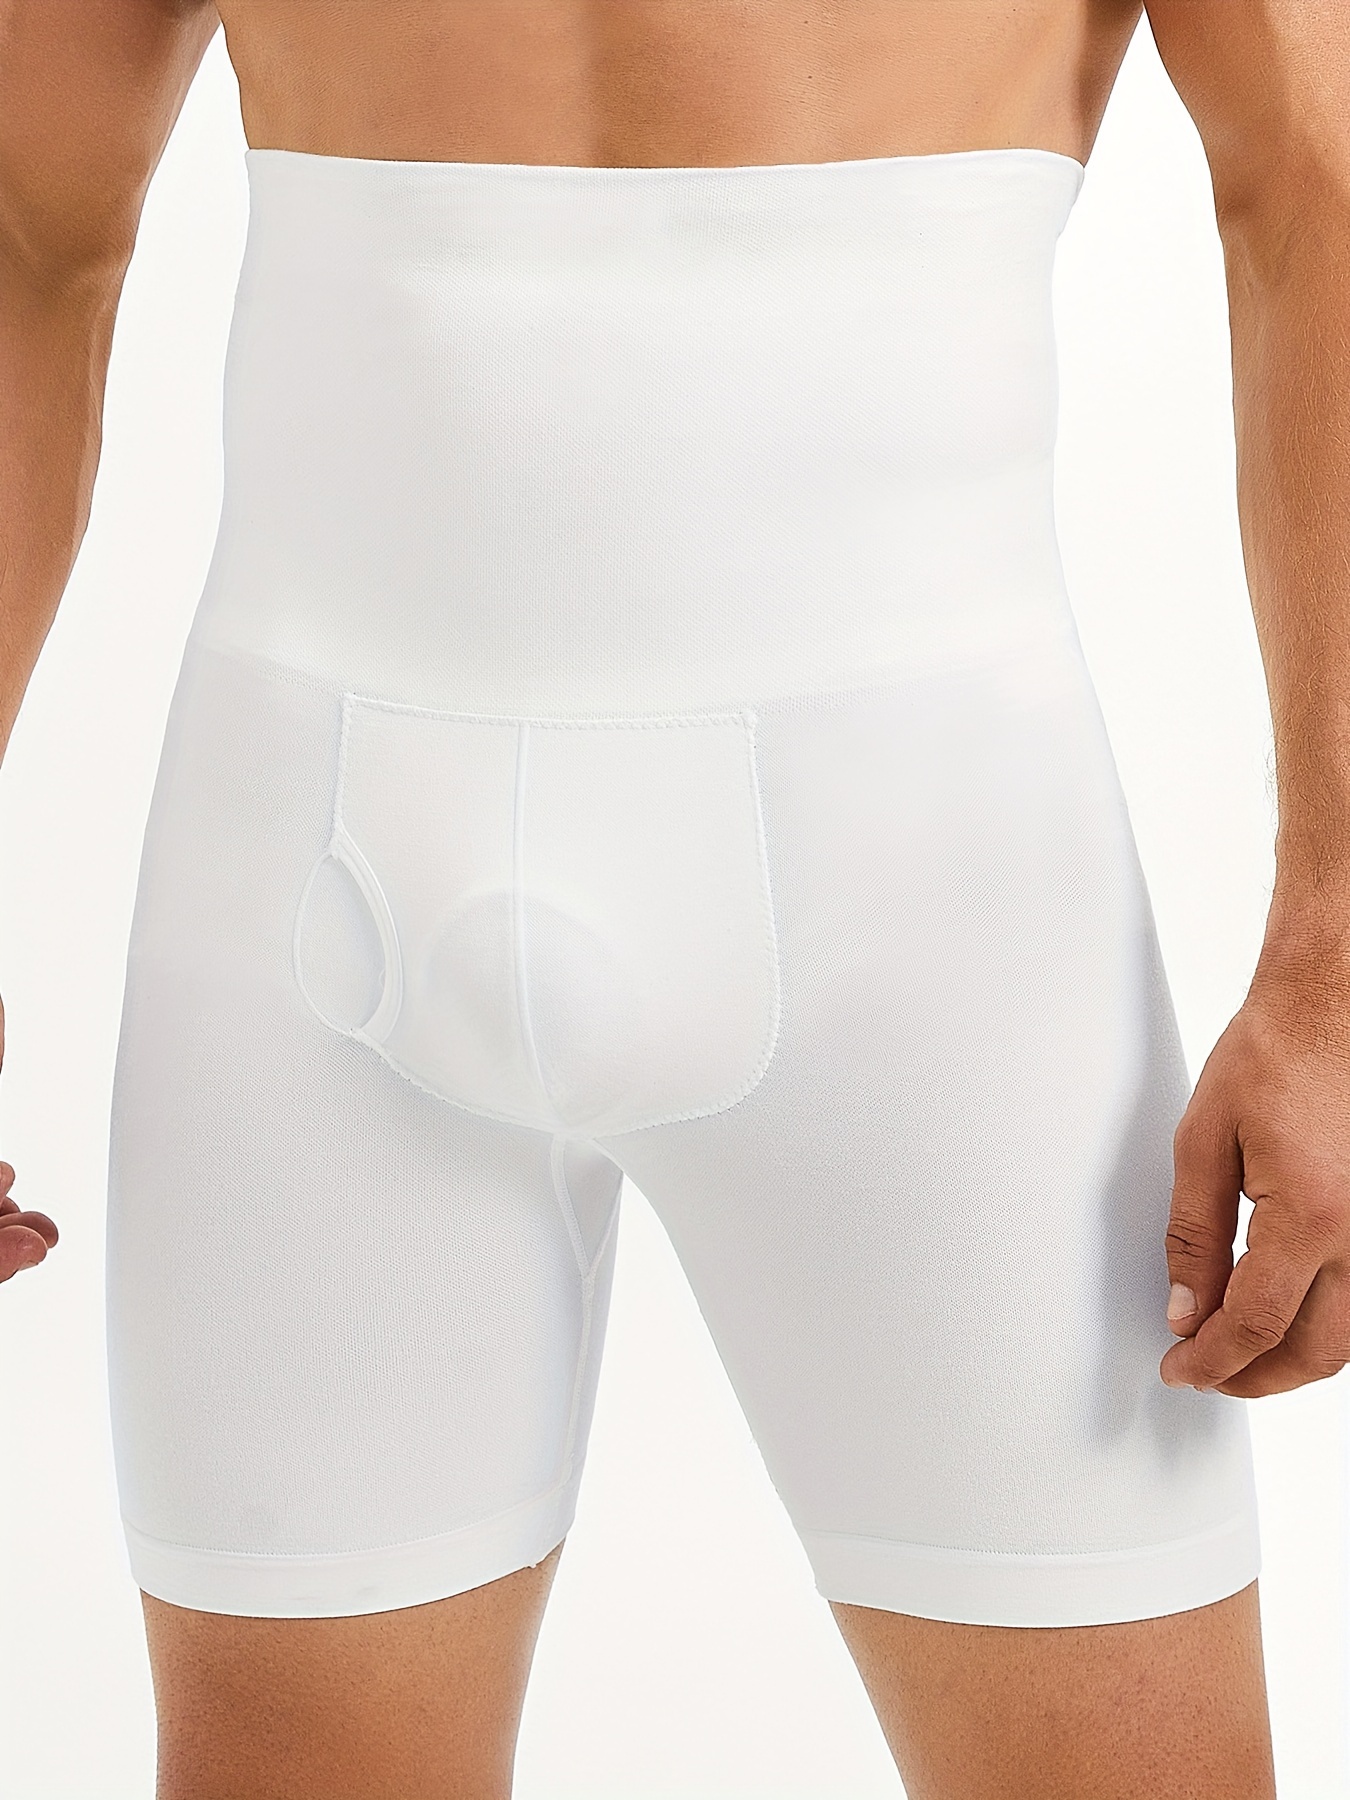 Men's Body Shaper Tummy Control Slimming Shape wear Shorts High